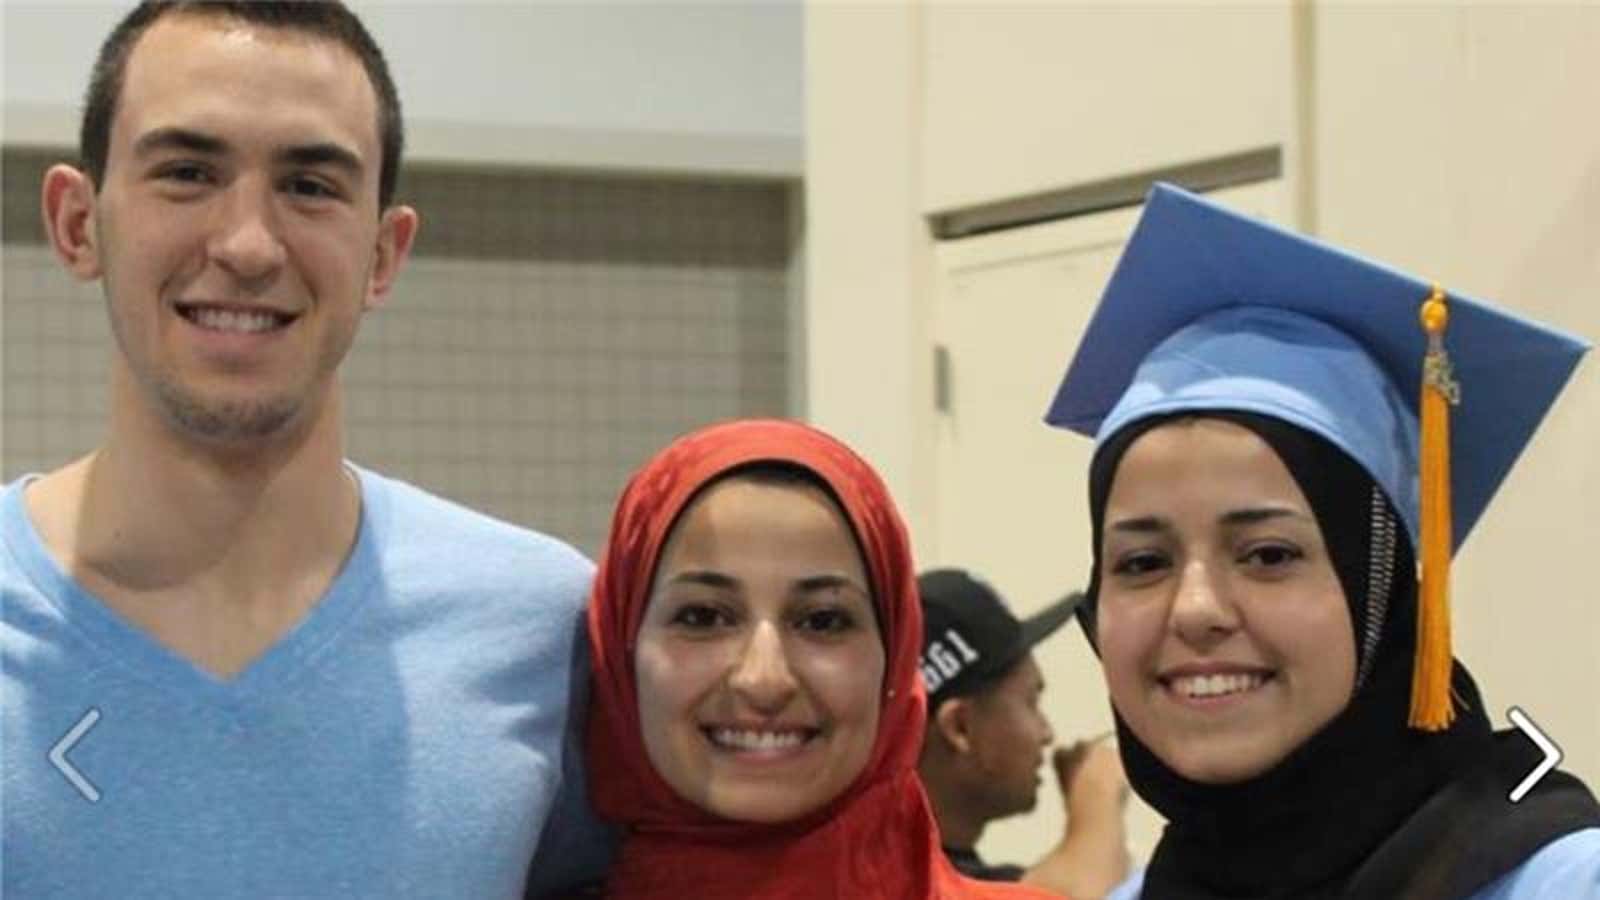 Deah Shaddy Barakat, Yusor Mohammad Abu-Salha, and Razan Mohammad Abu-Salha, who were killed in Chapel Hill.